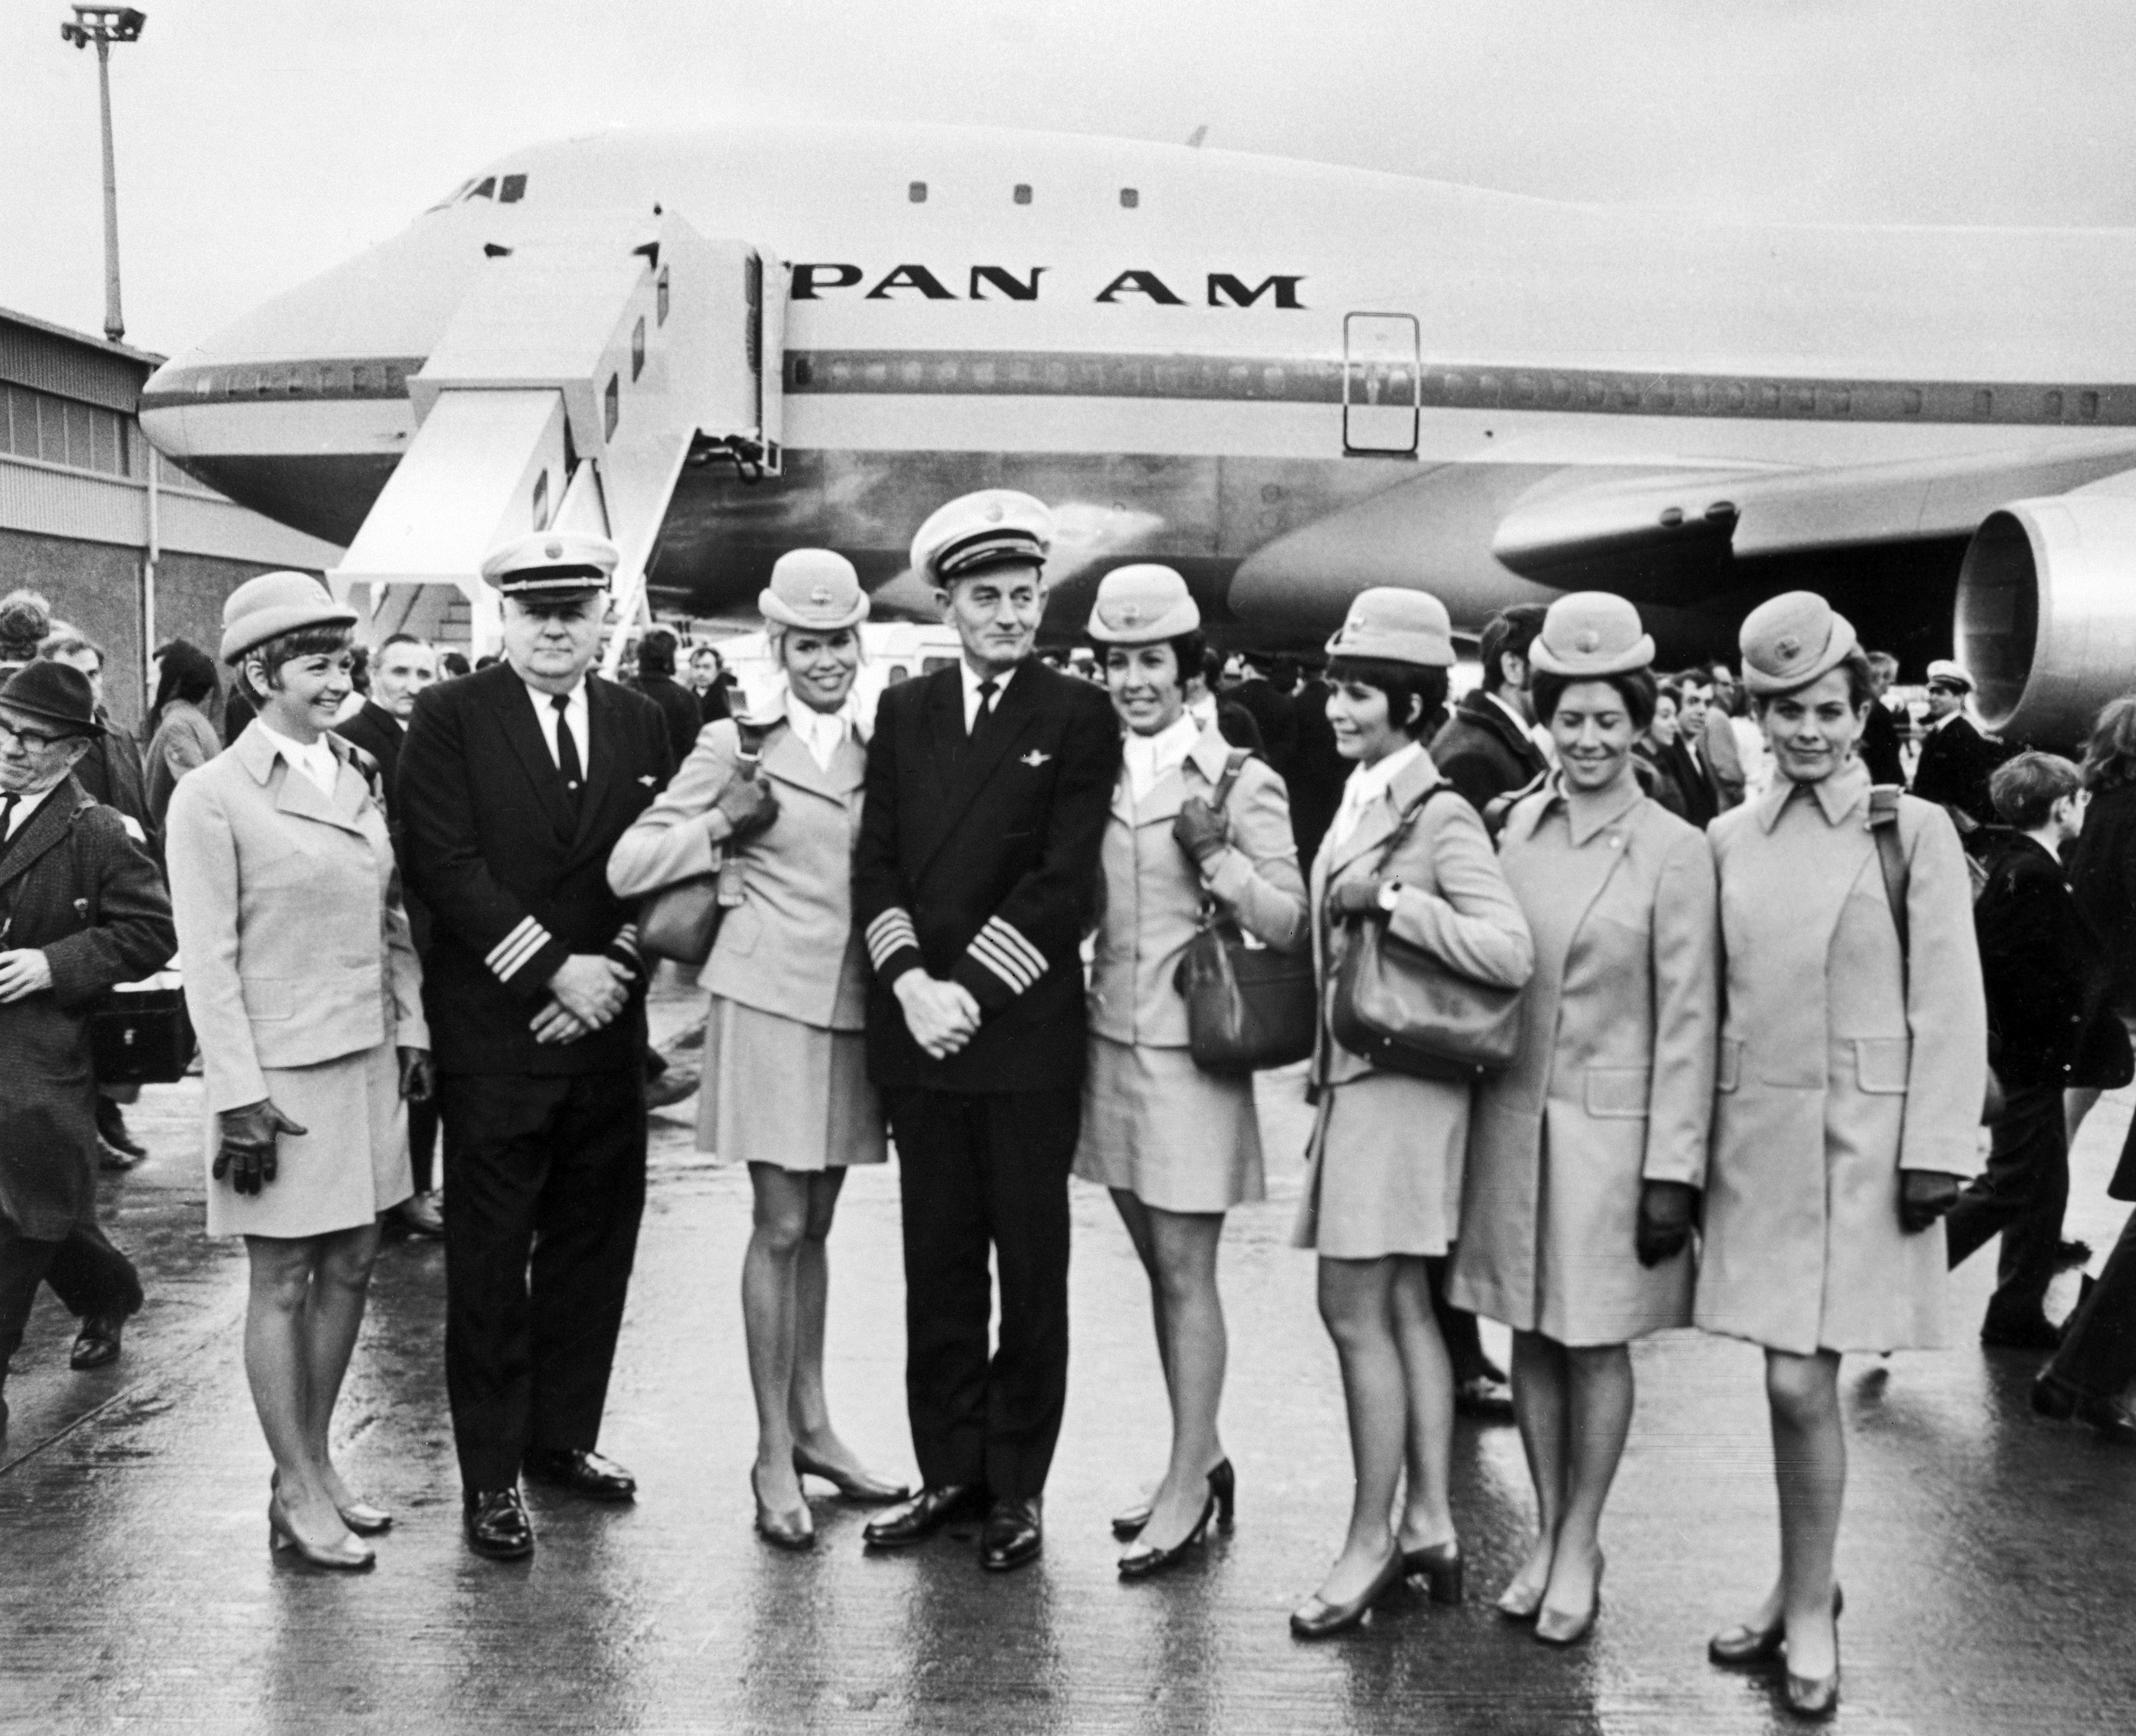 Pan Am pilots and flight attendants